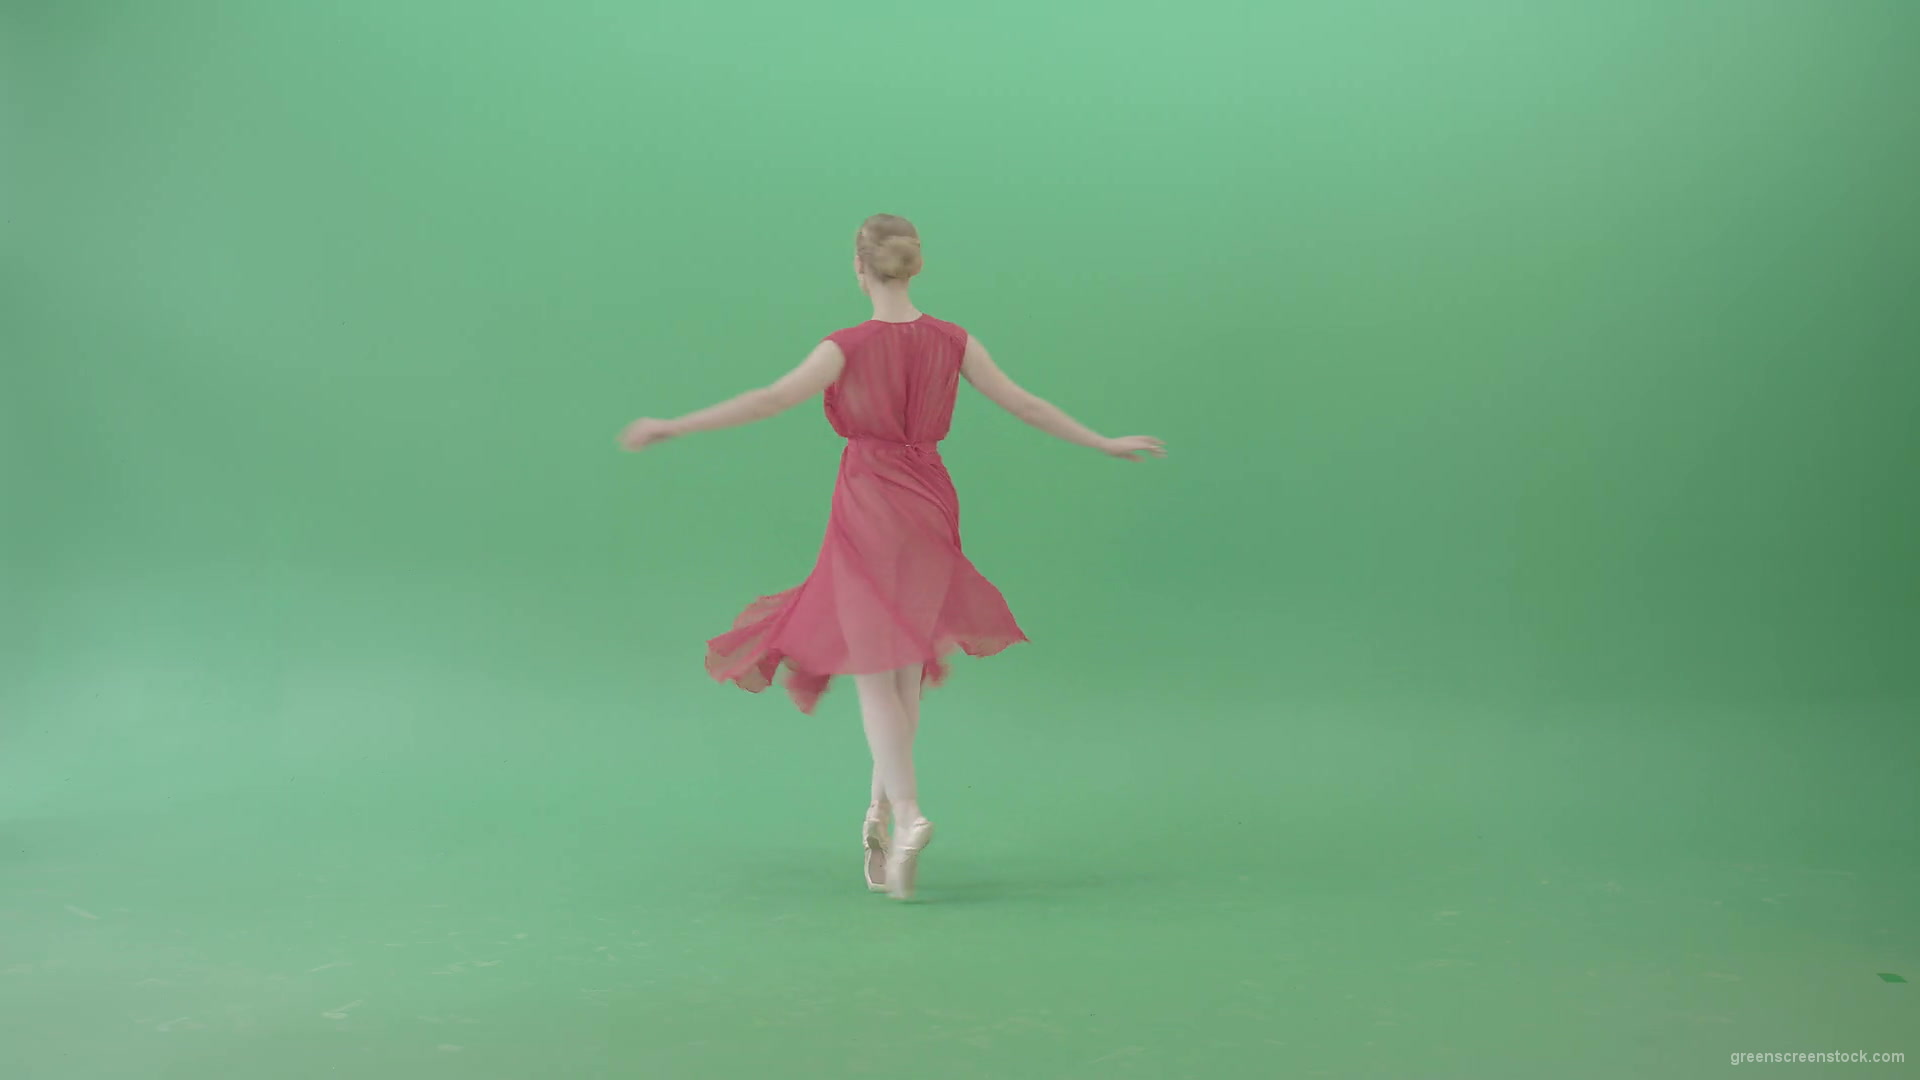 Light-Ballet-dancing-girl-in-red-wind-dress-spinning-on-green-screen-4K-Video-Footage-1920_006 Green Screen Stock